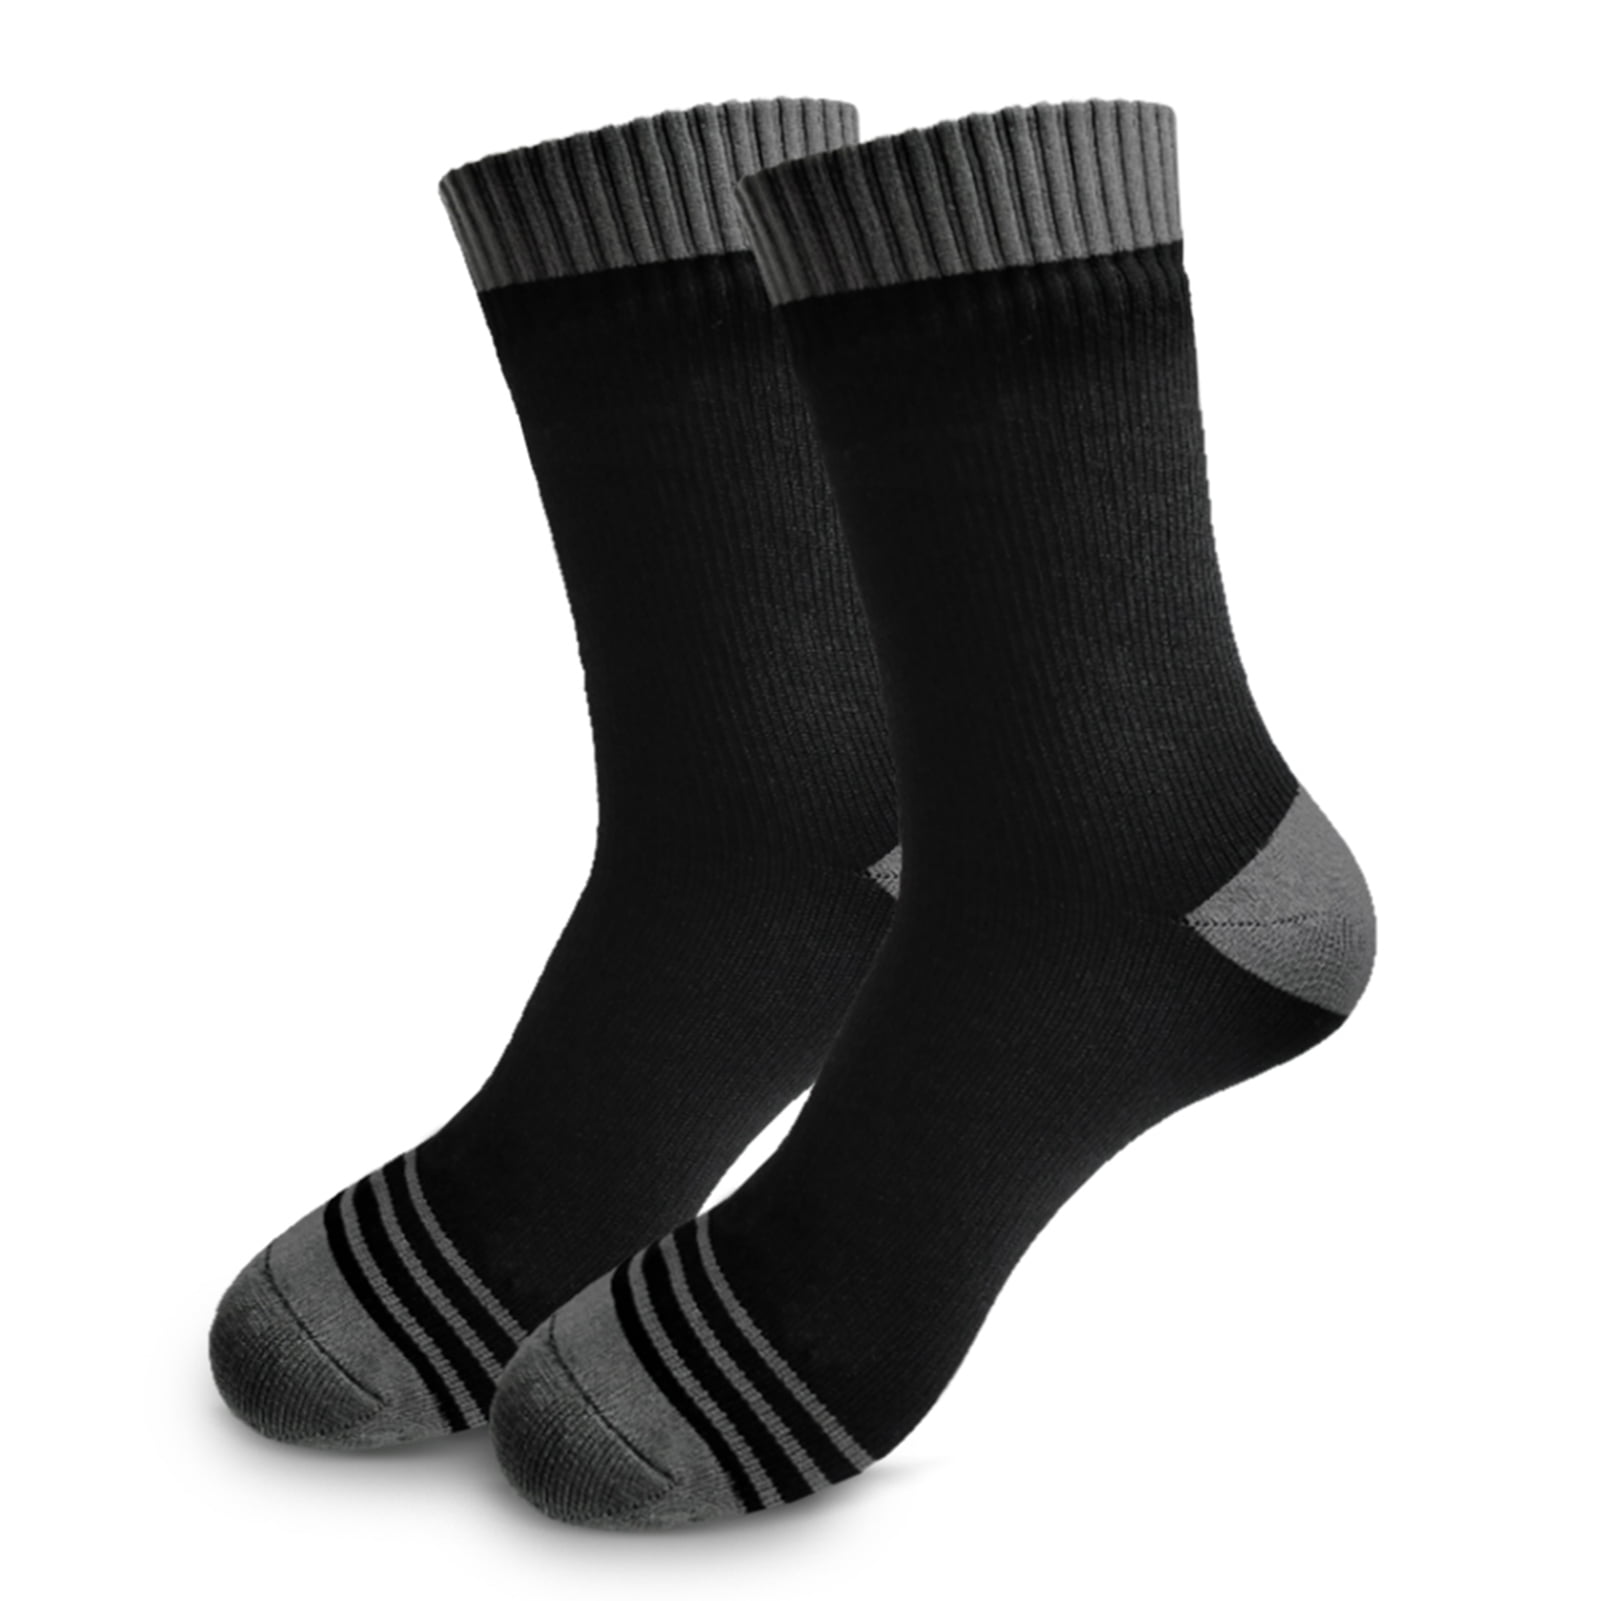 GoolRC Waterproof Breathable Socks for Men Women Sports Hiking Skiing ...